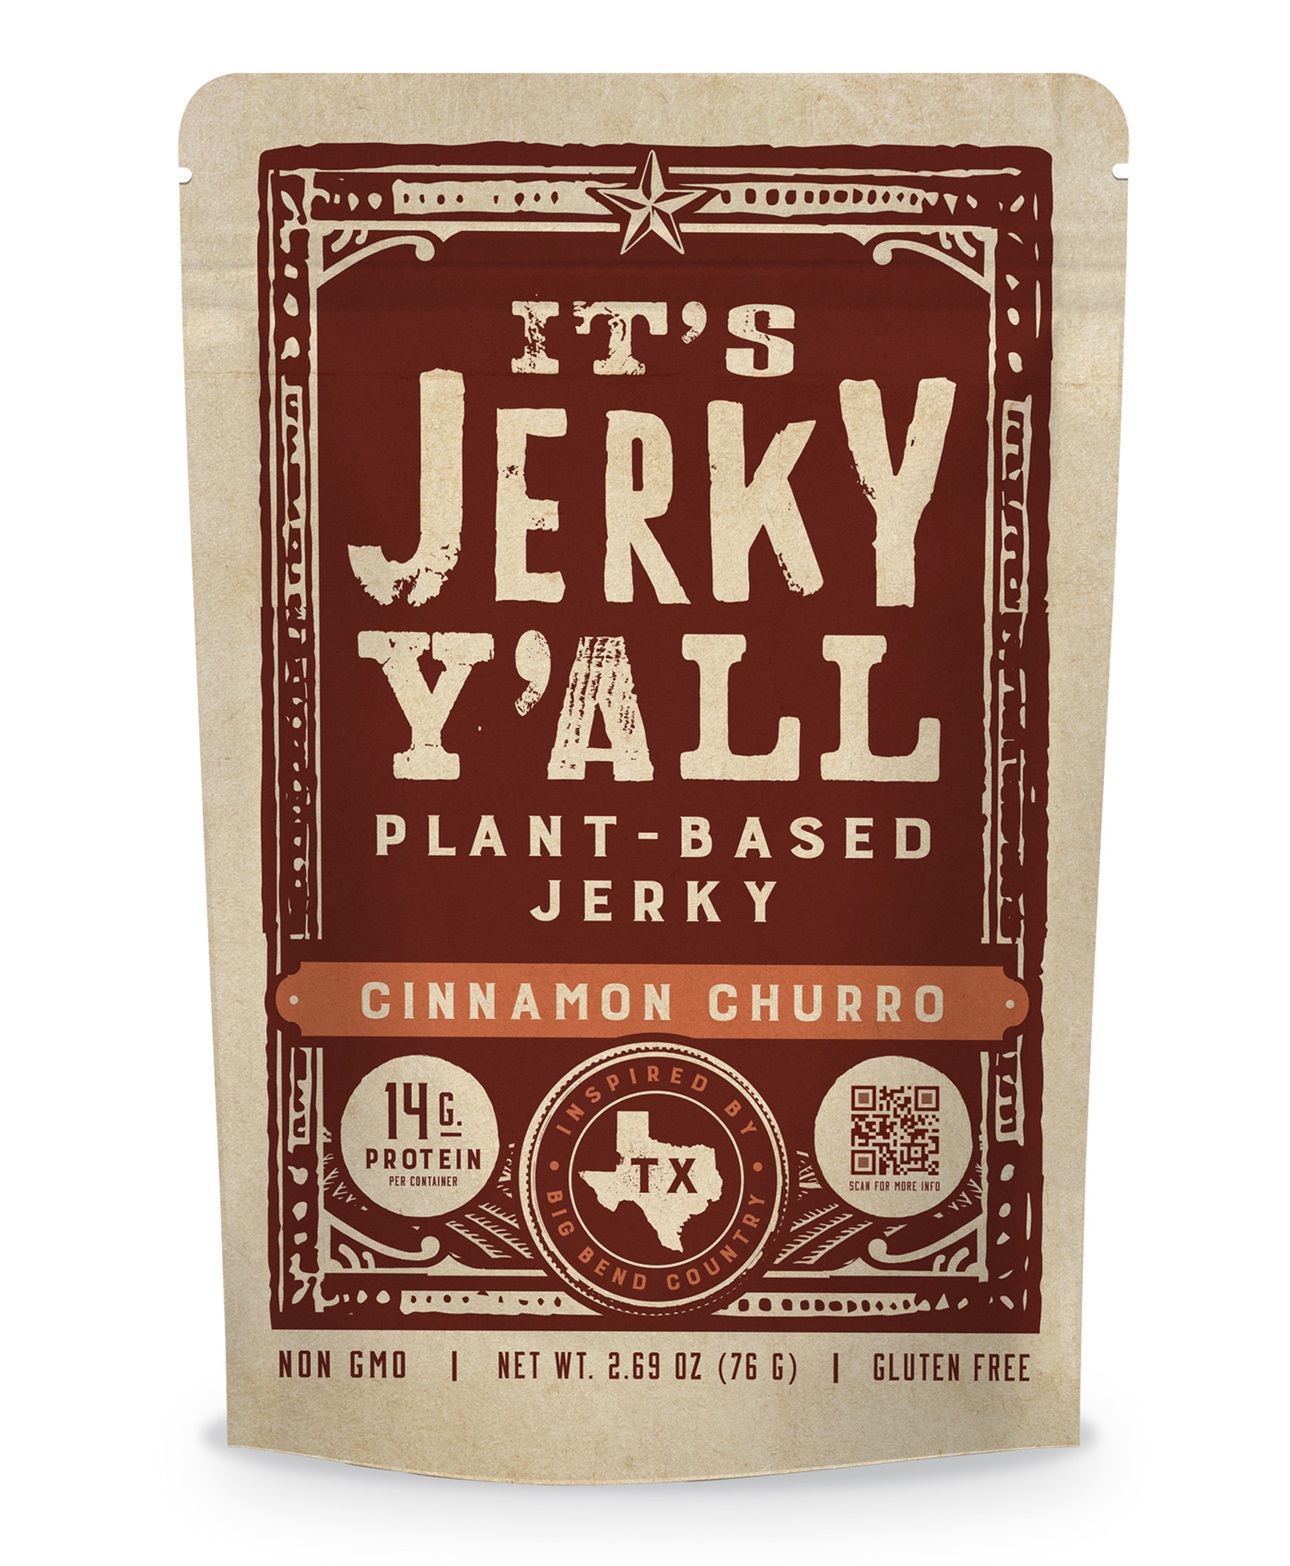 All Y’alls Foods Cinnamon Churro plant-based jerky